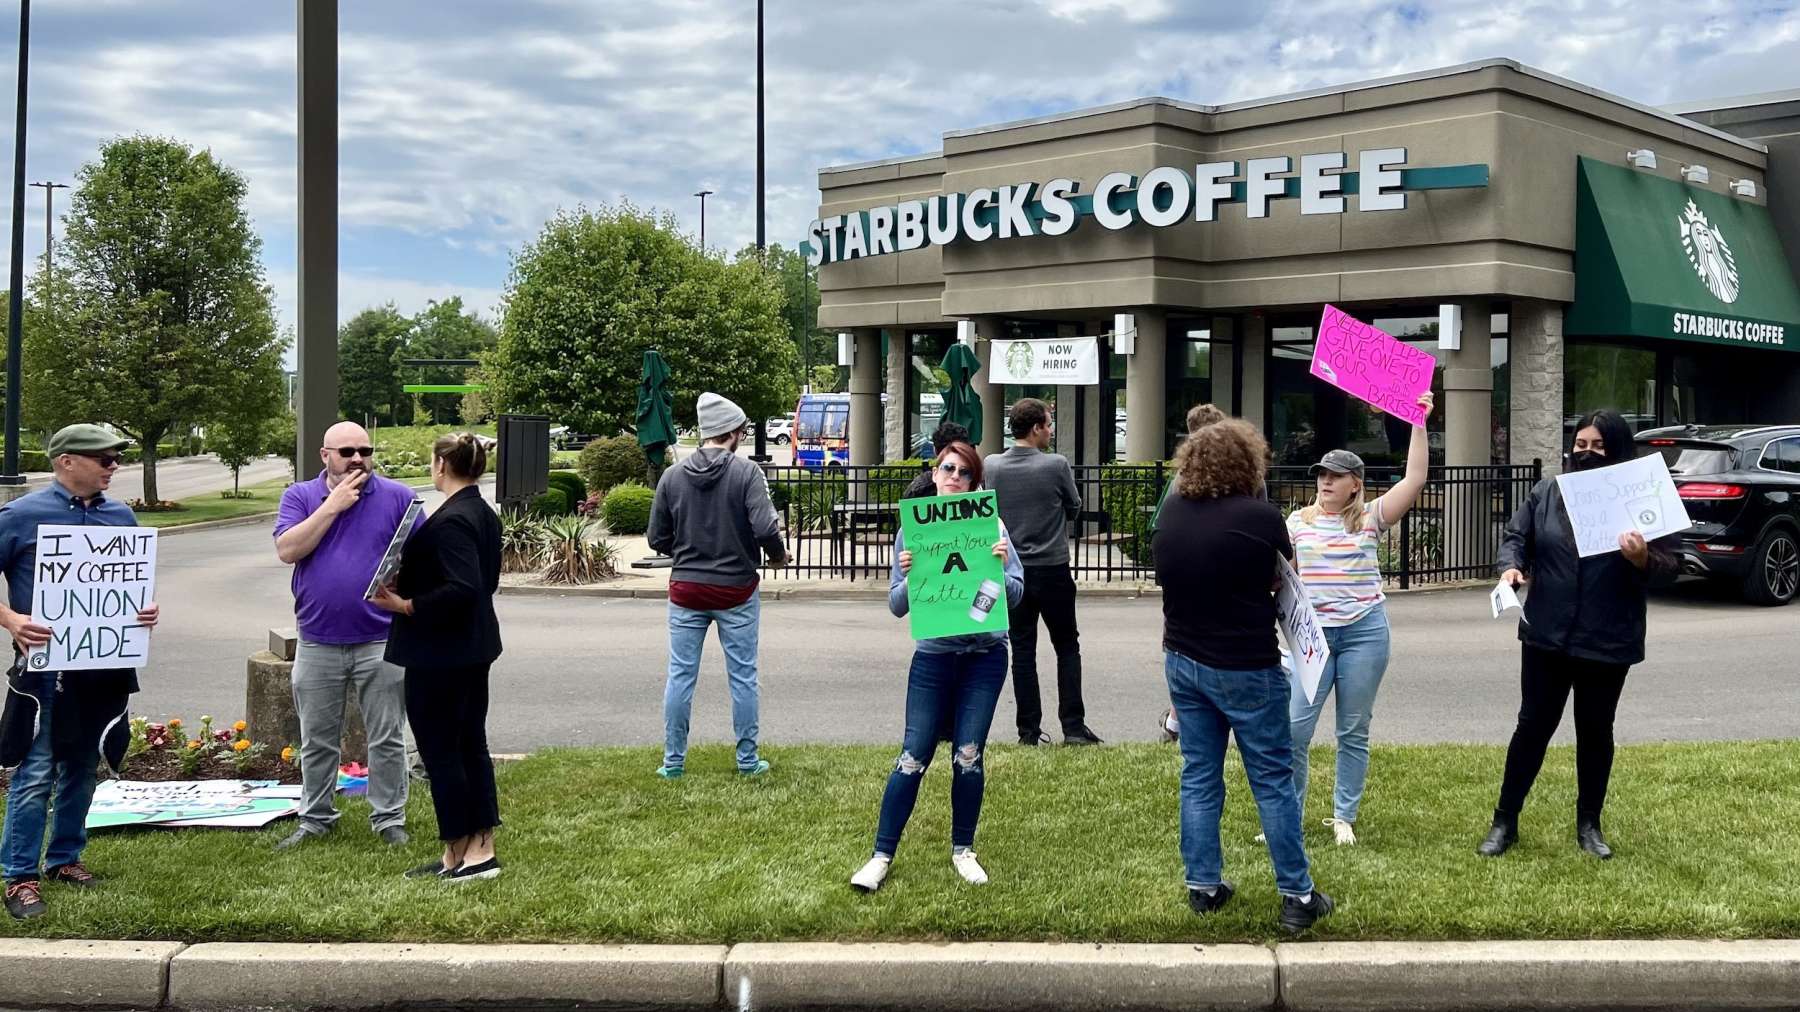 RI’s labor movement welcomes unionizing Starbucks workers